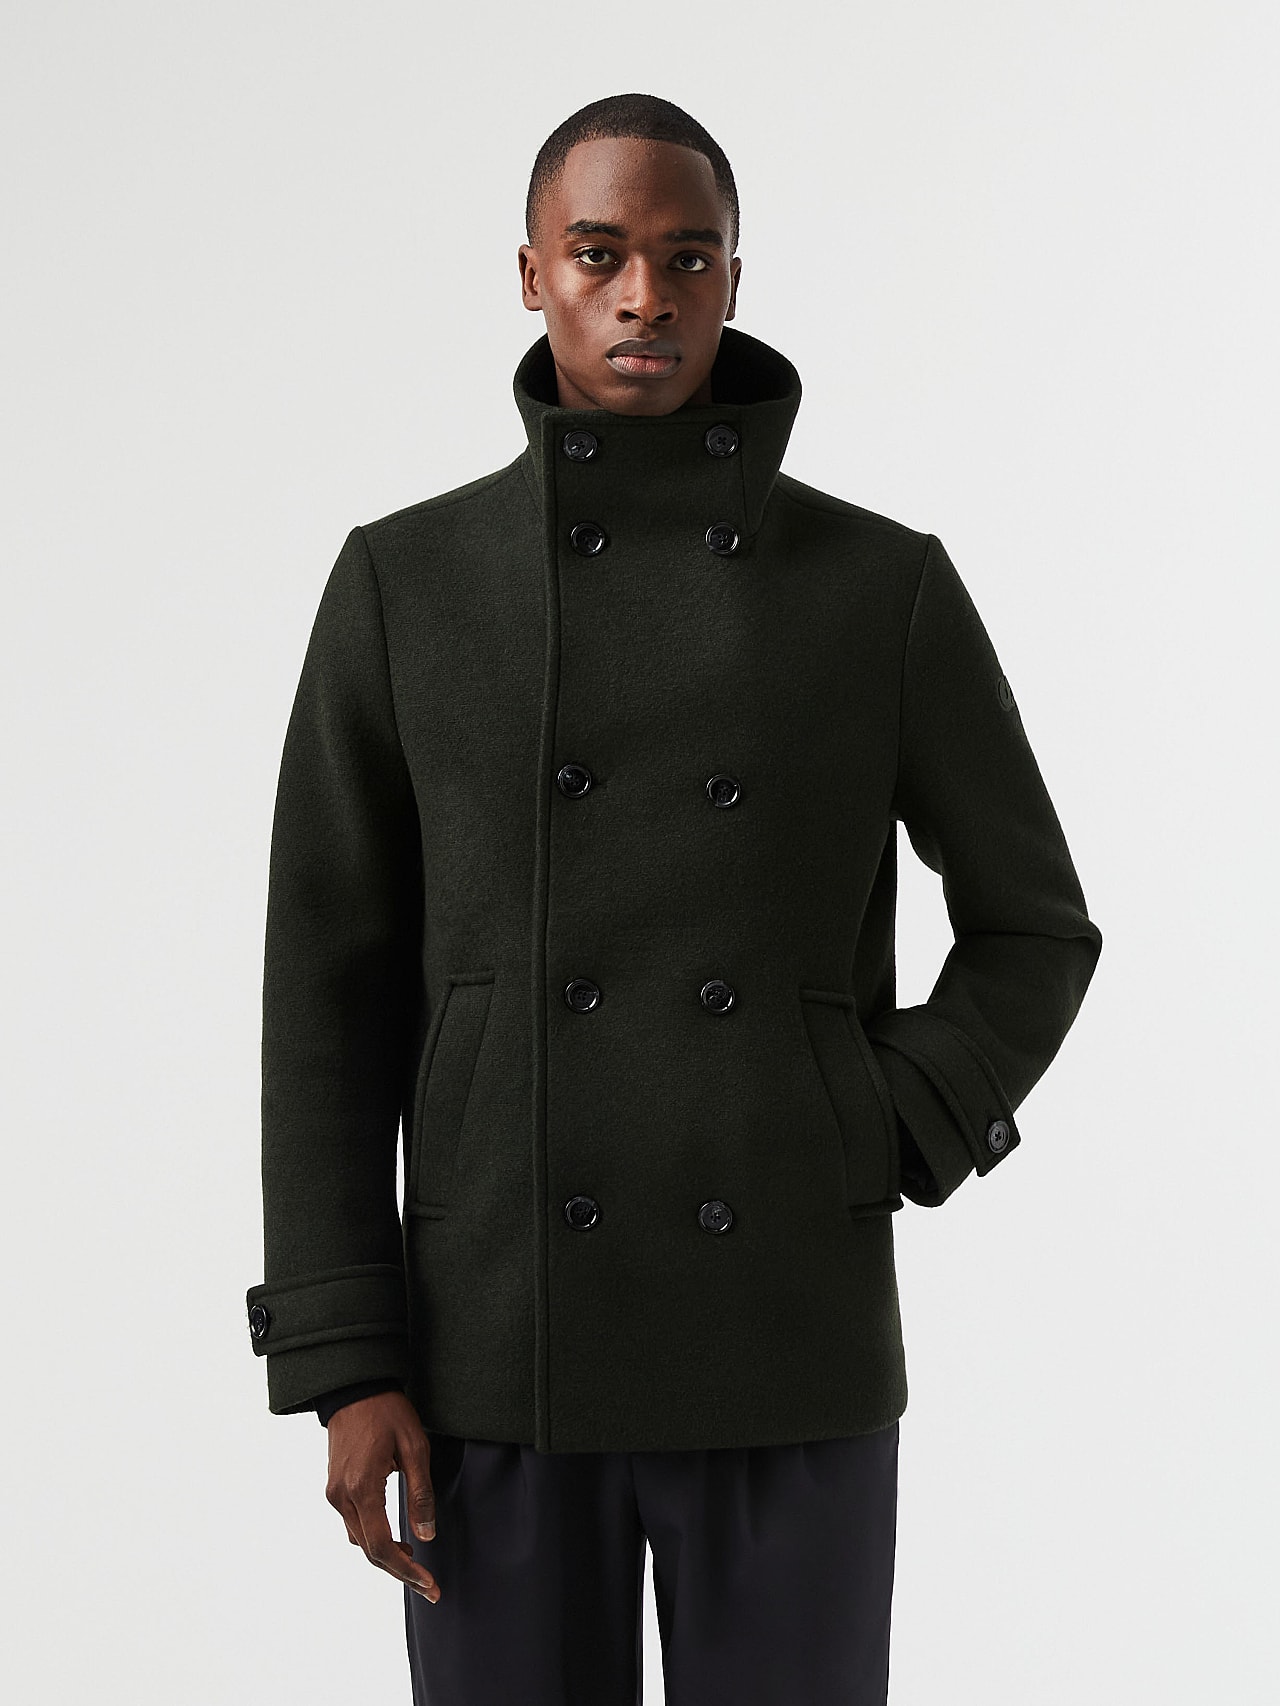 Bonded Wool Caban Jacket | ORATA V2.Y6.02 | Dark Green | AlphaTauri